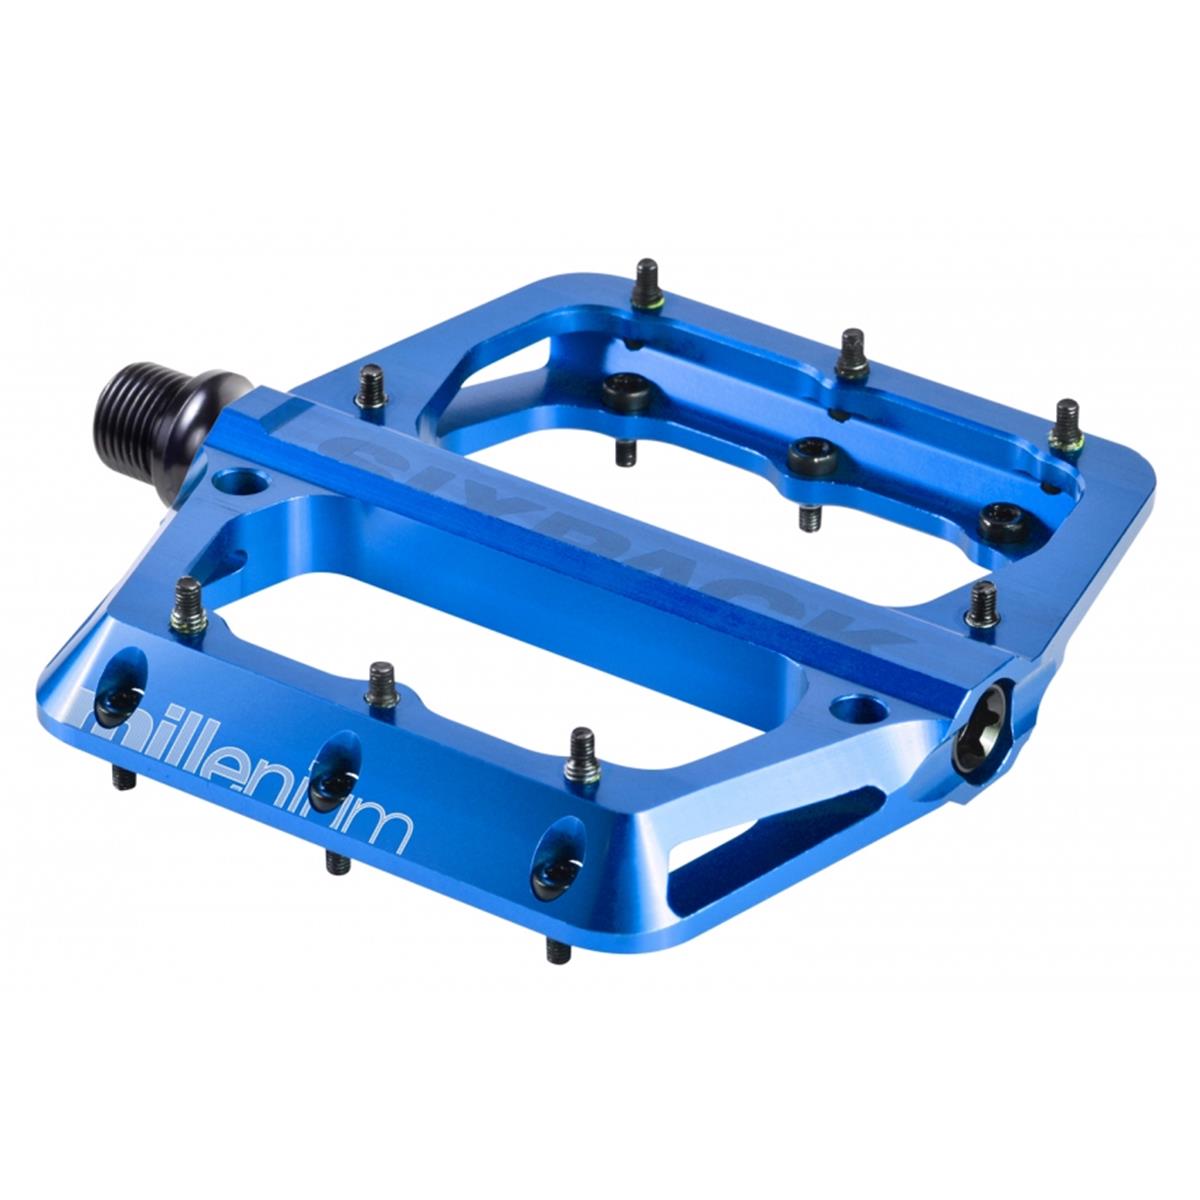 Sixpack Pedals Millenium 2.0 Blue, 105x110 mm, 32 M4 Pins, 1 Pair